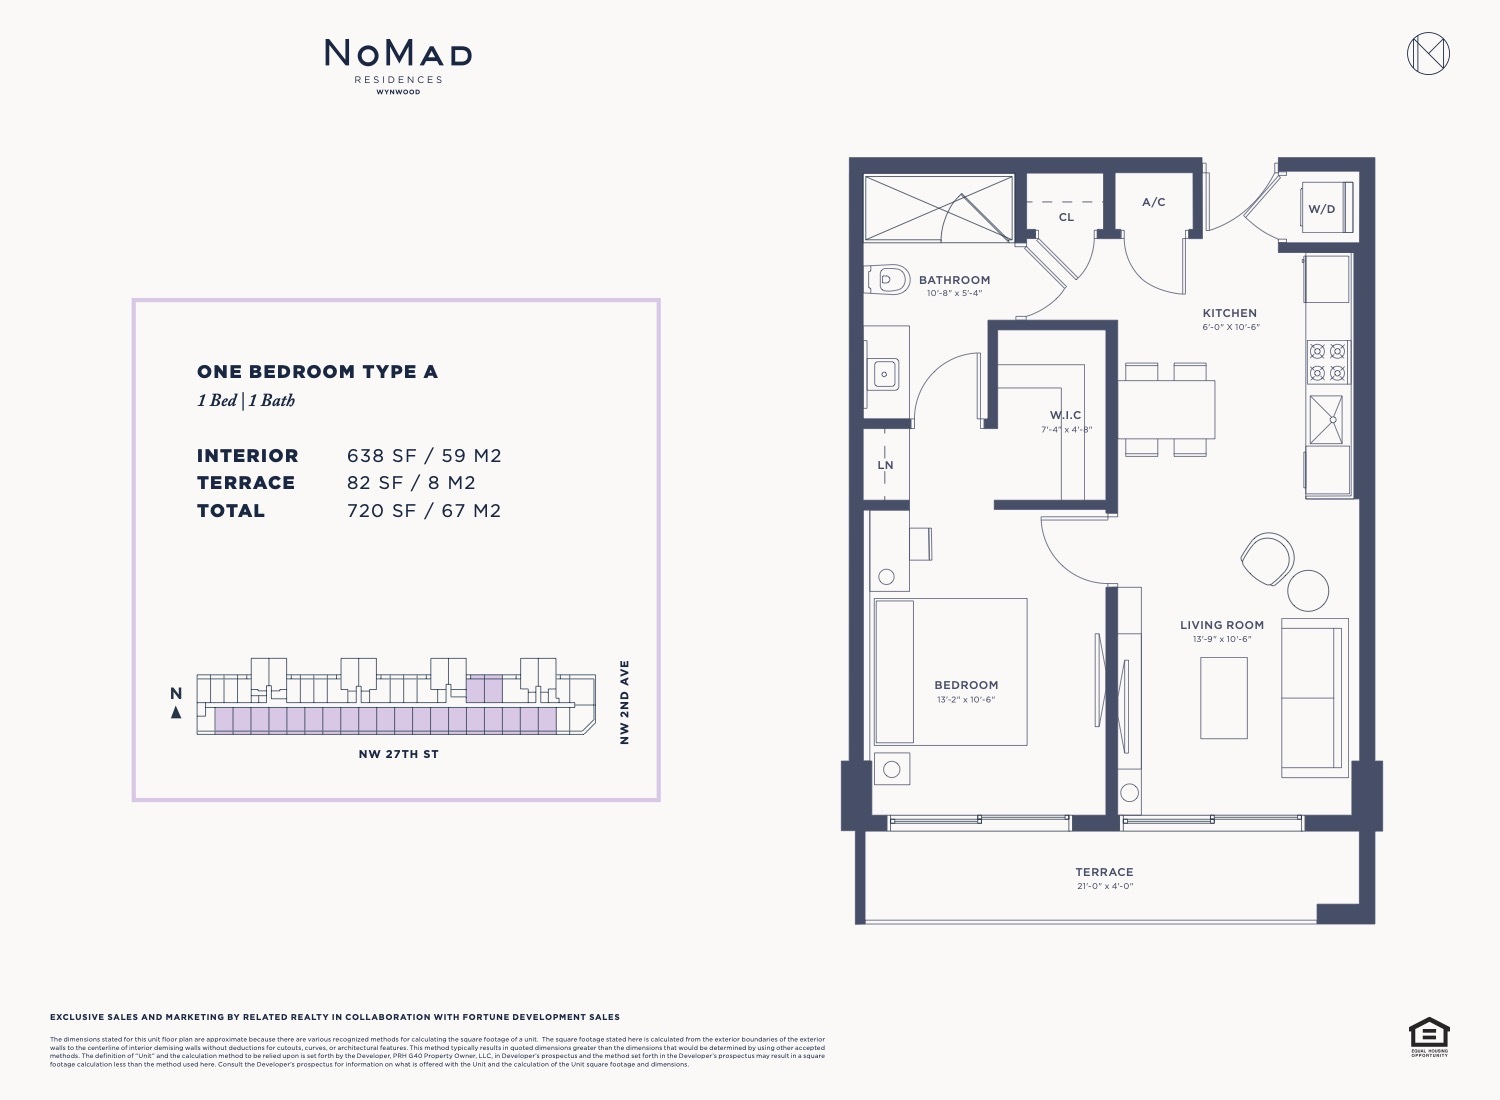 Floor Plan for Nomad Wynwood Floorplans, One Bedroom Type A